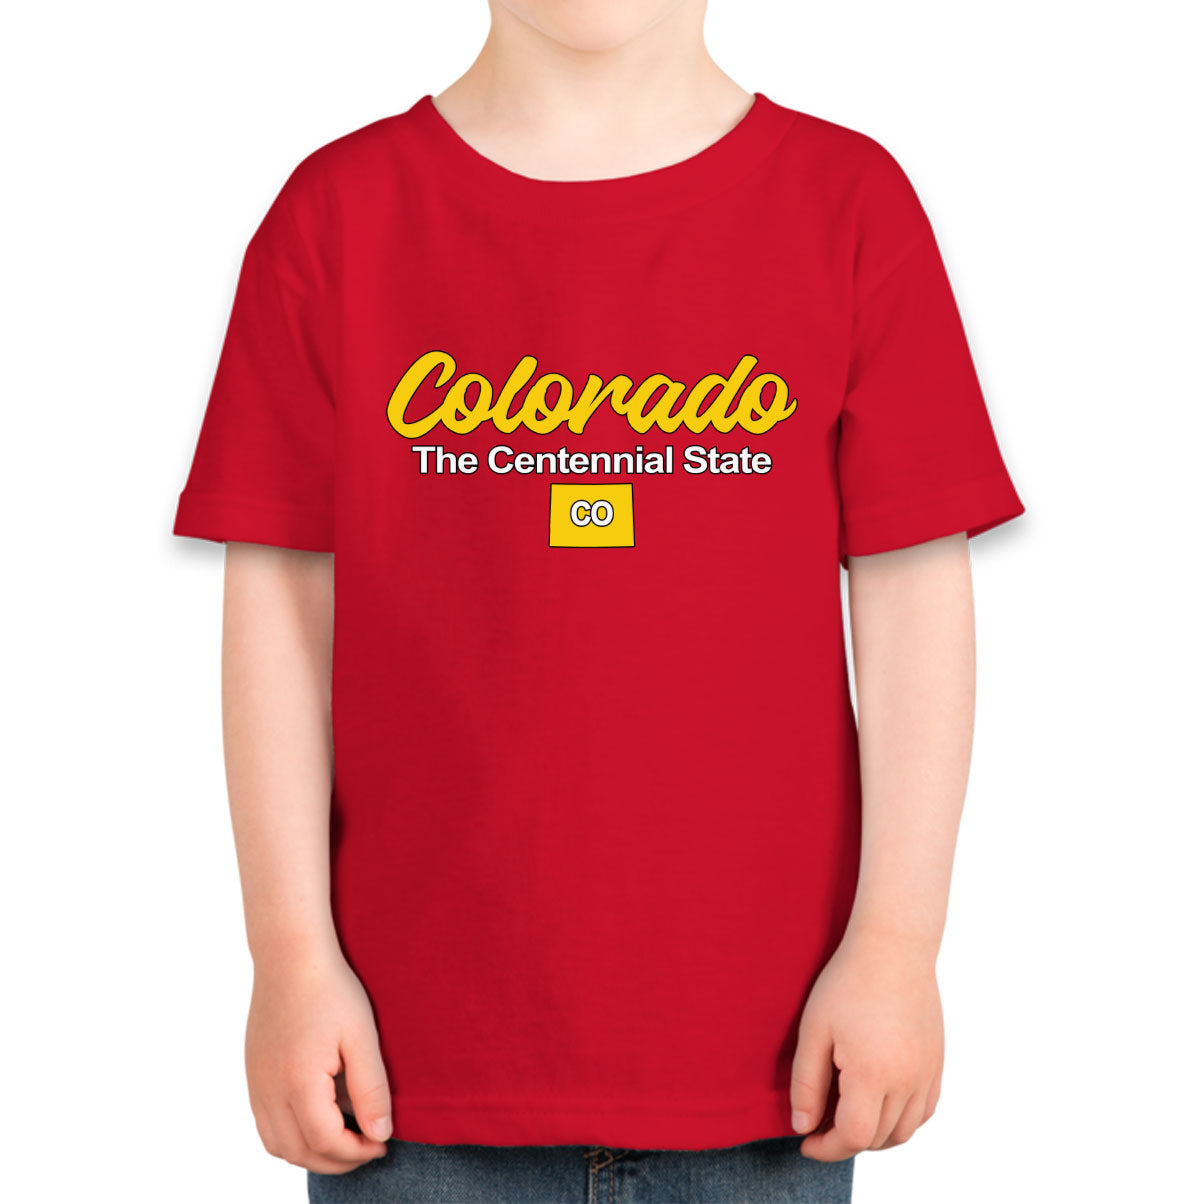 Colorado The Centennial State Toddler T-shirt